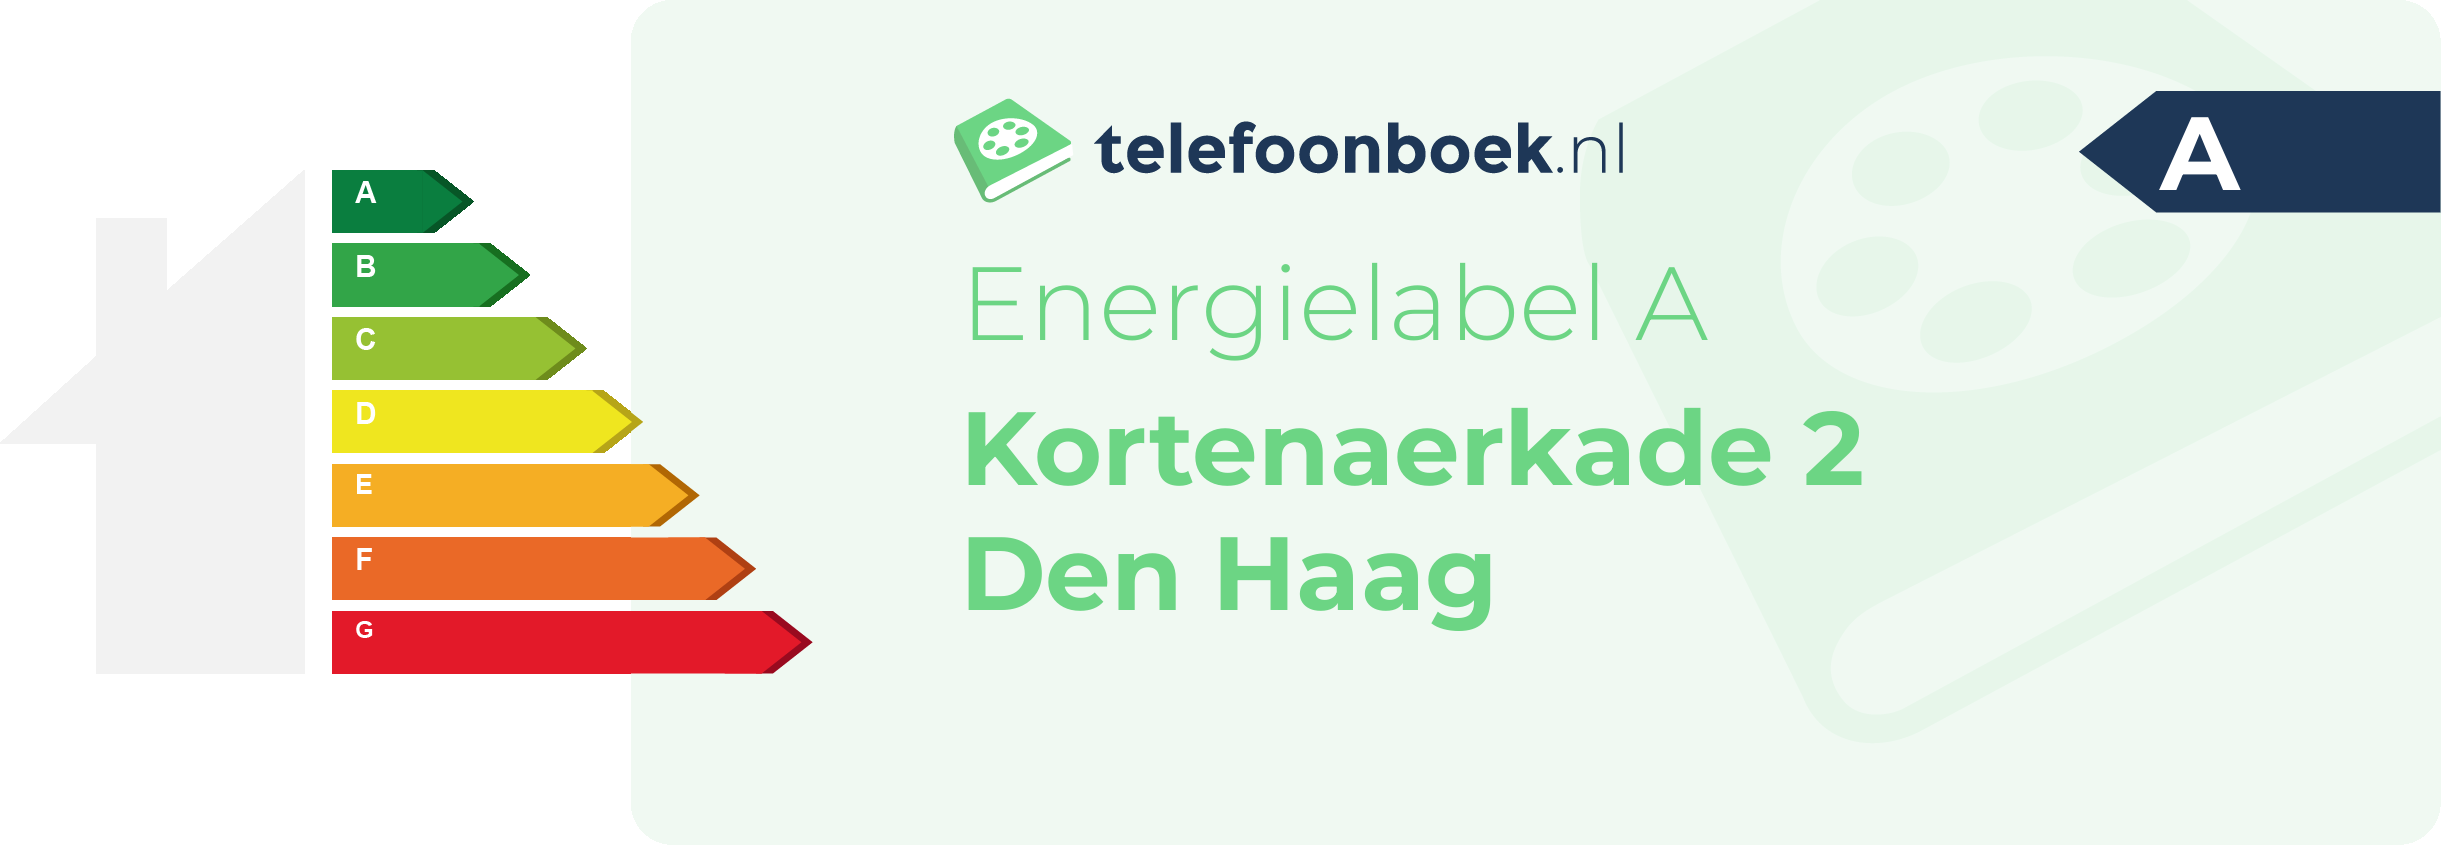 Energielabel Kortenaerkade 2 Den Haag